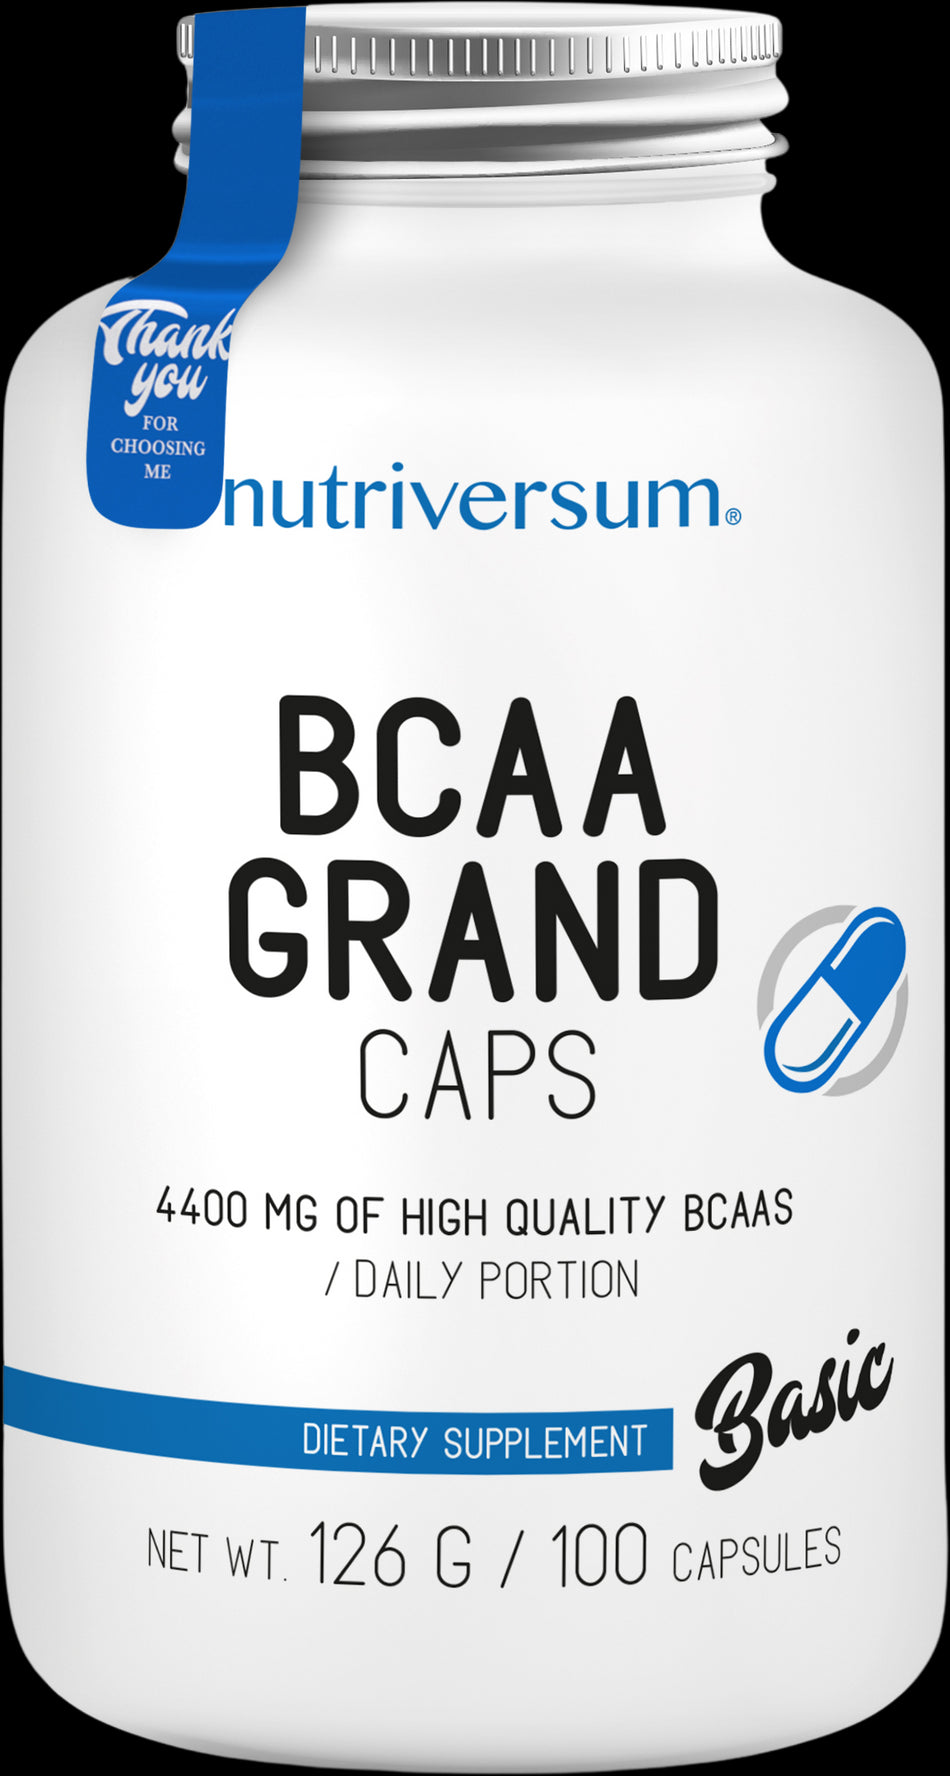 BCAA Grand Caps - BadiZdrav.BG